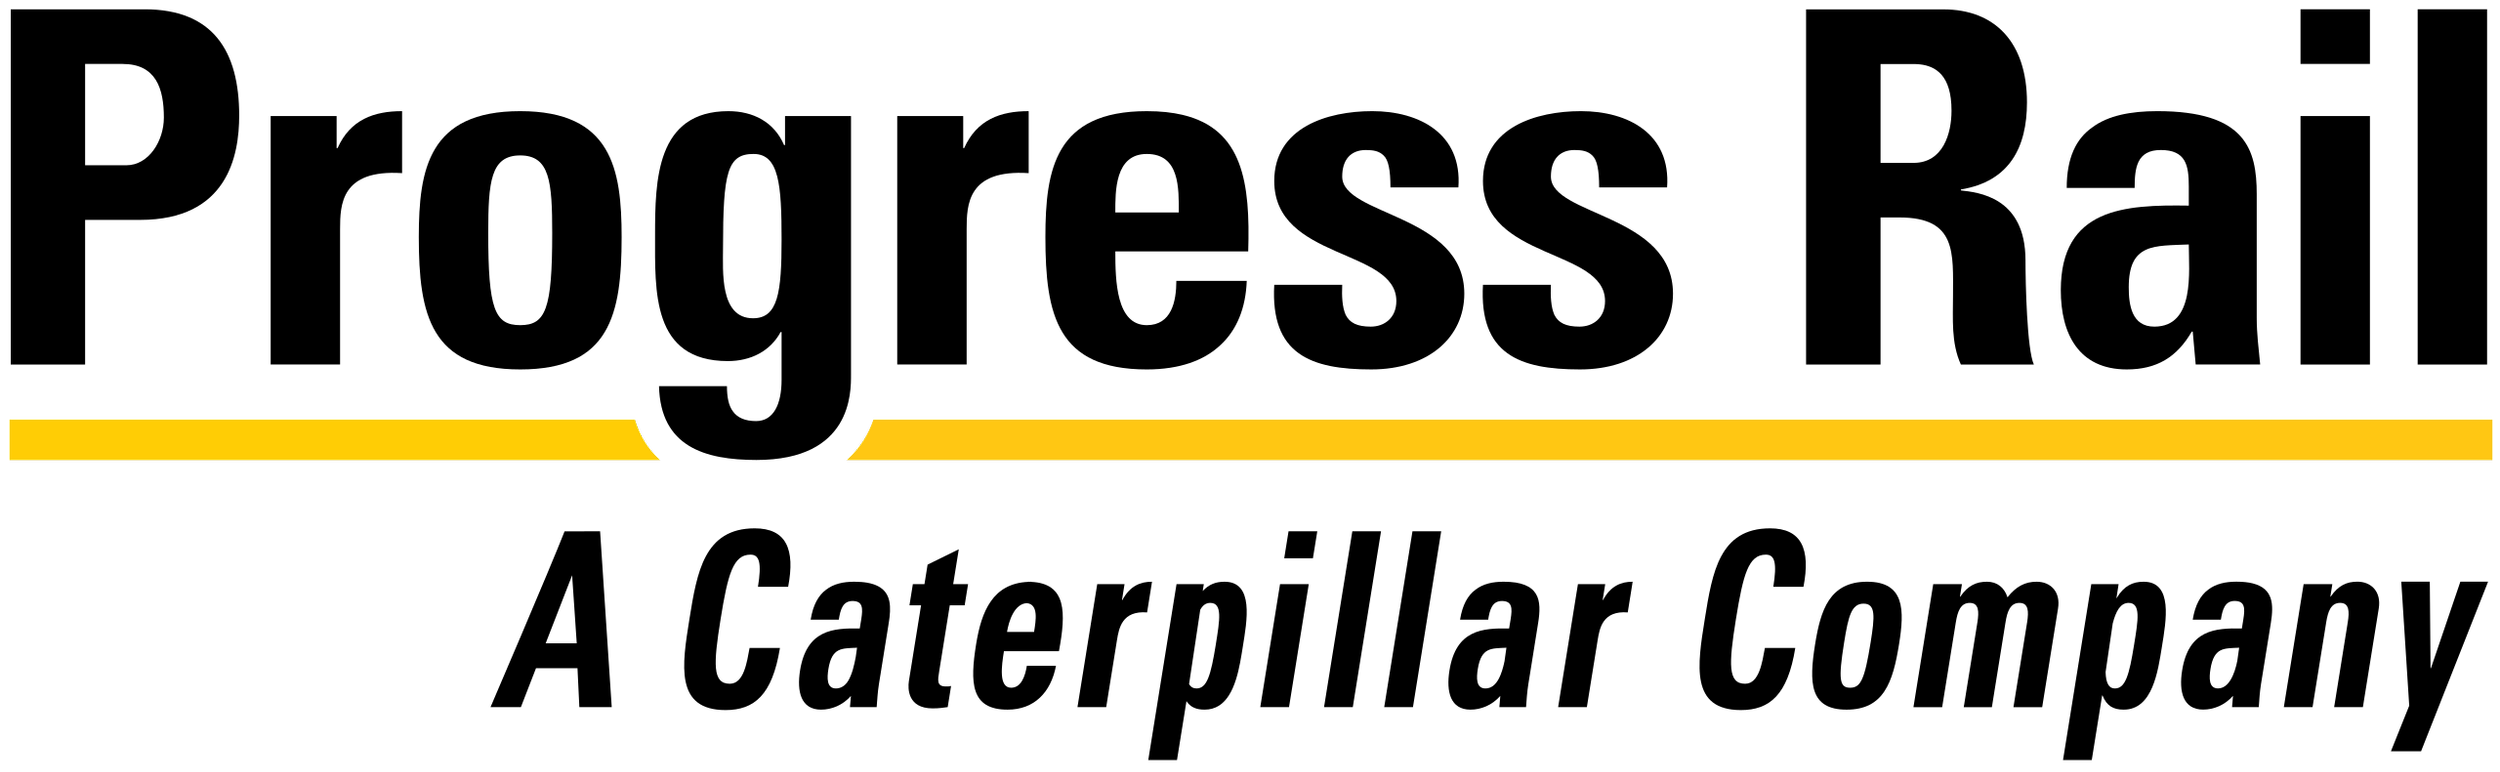 2560px-Progress_rail_company_logo.svg.png